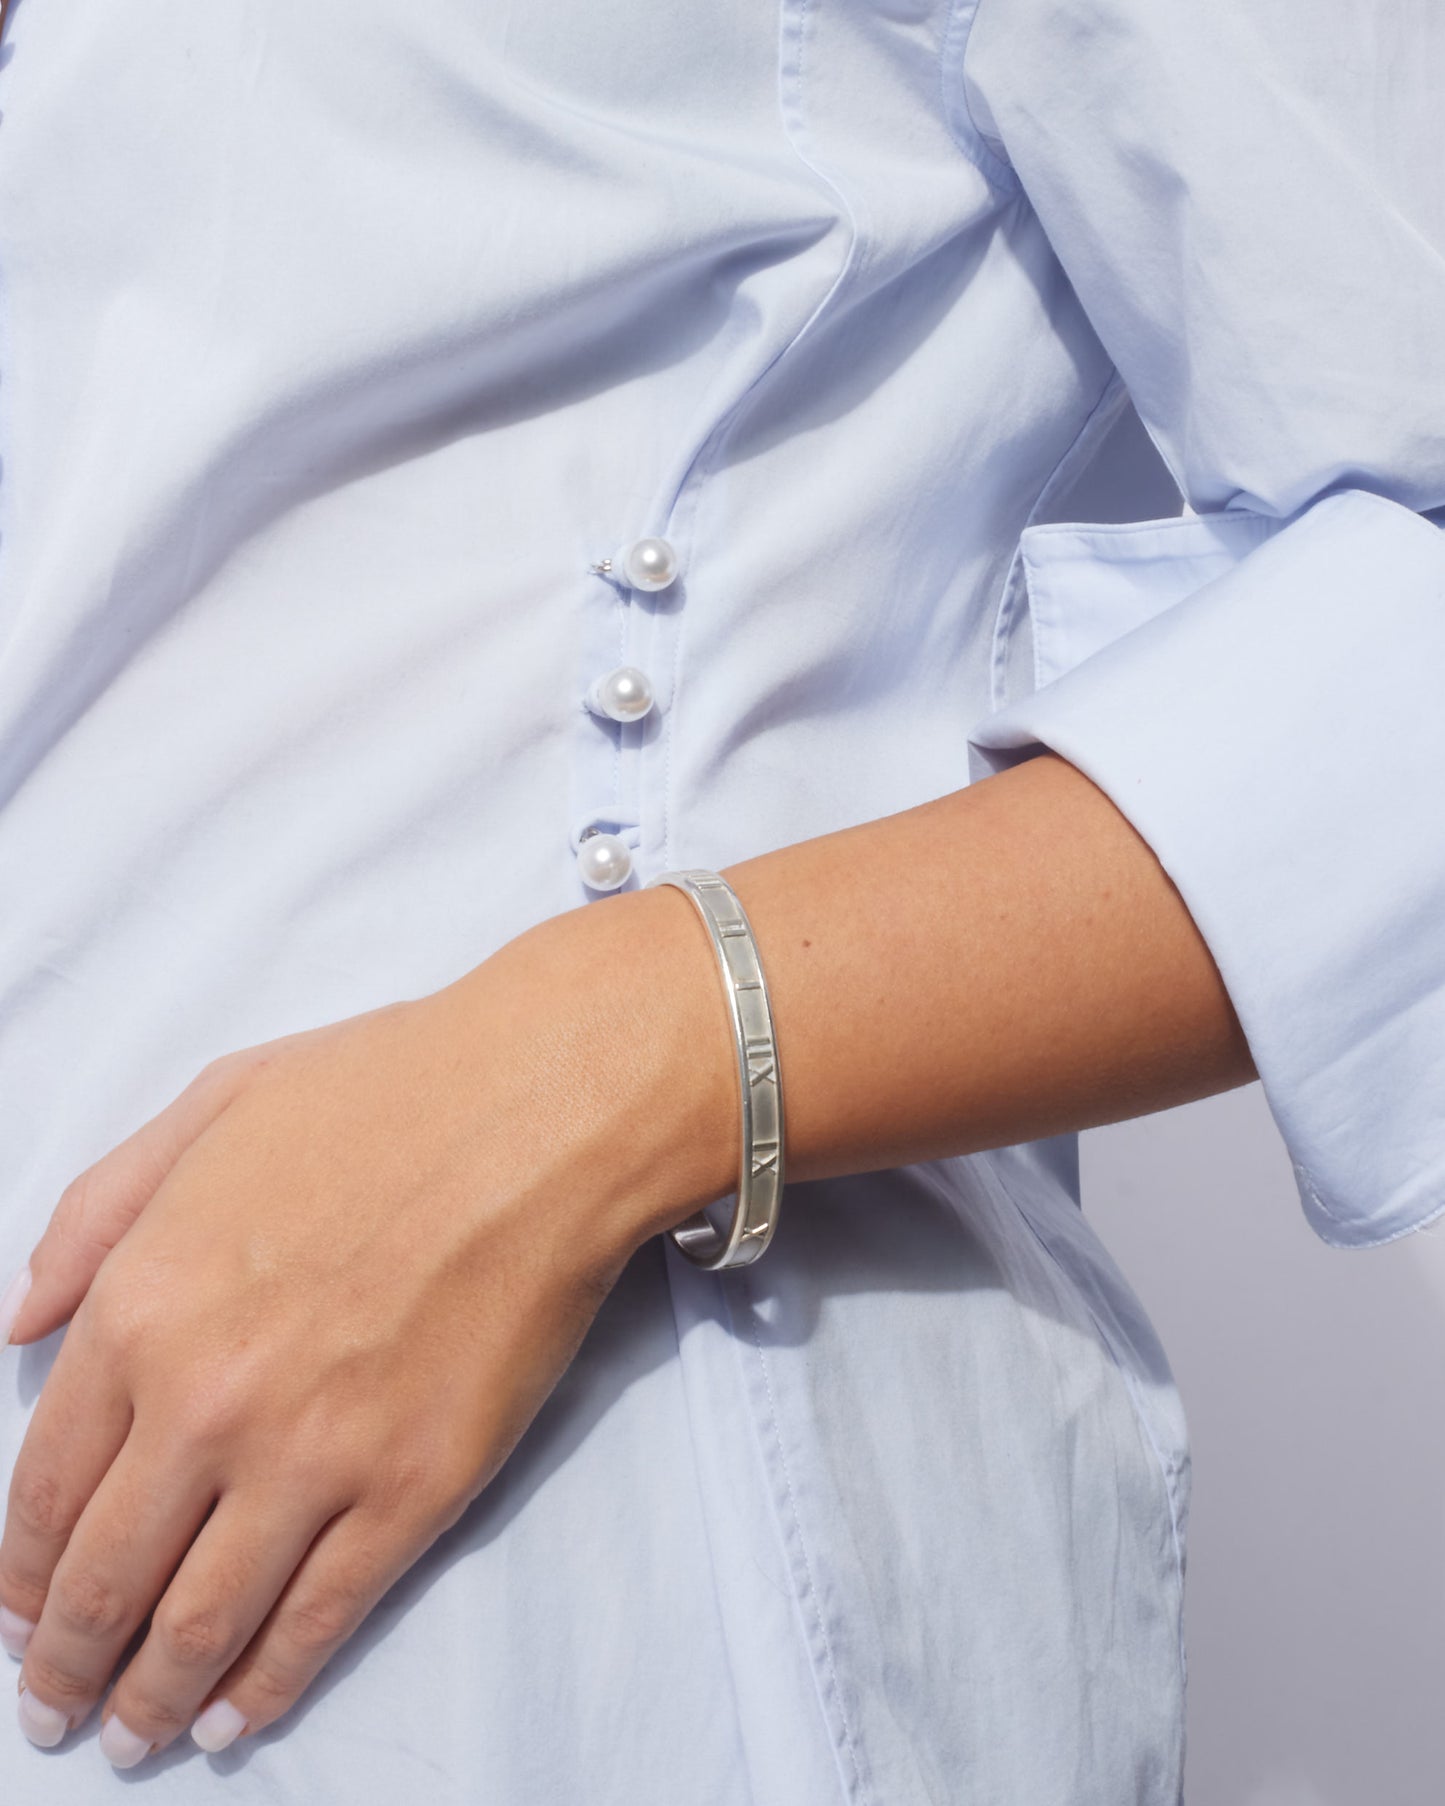 Tiffany & Co. Silver Atlas Roman Numeral Cuff Bracelet